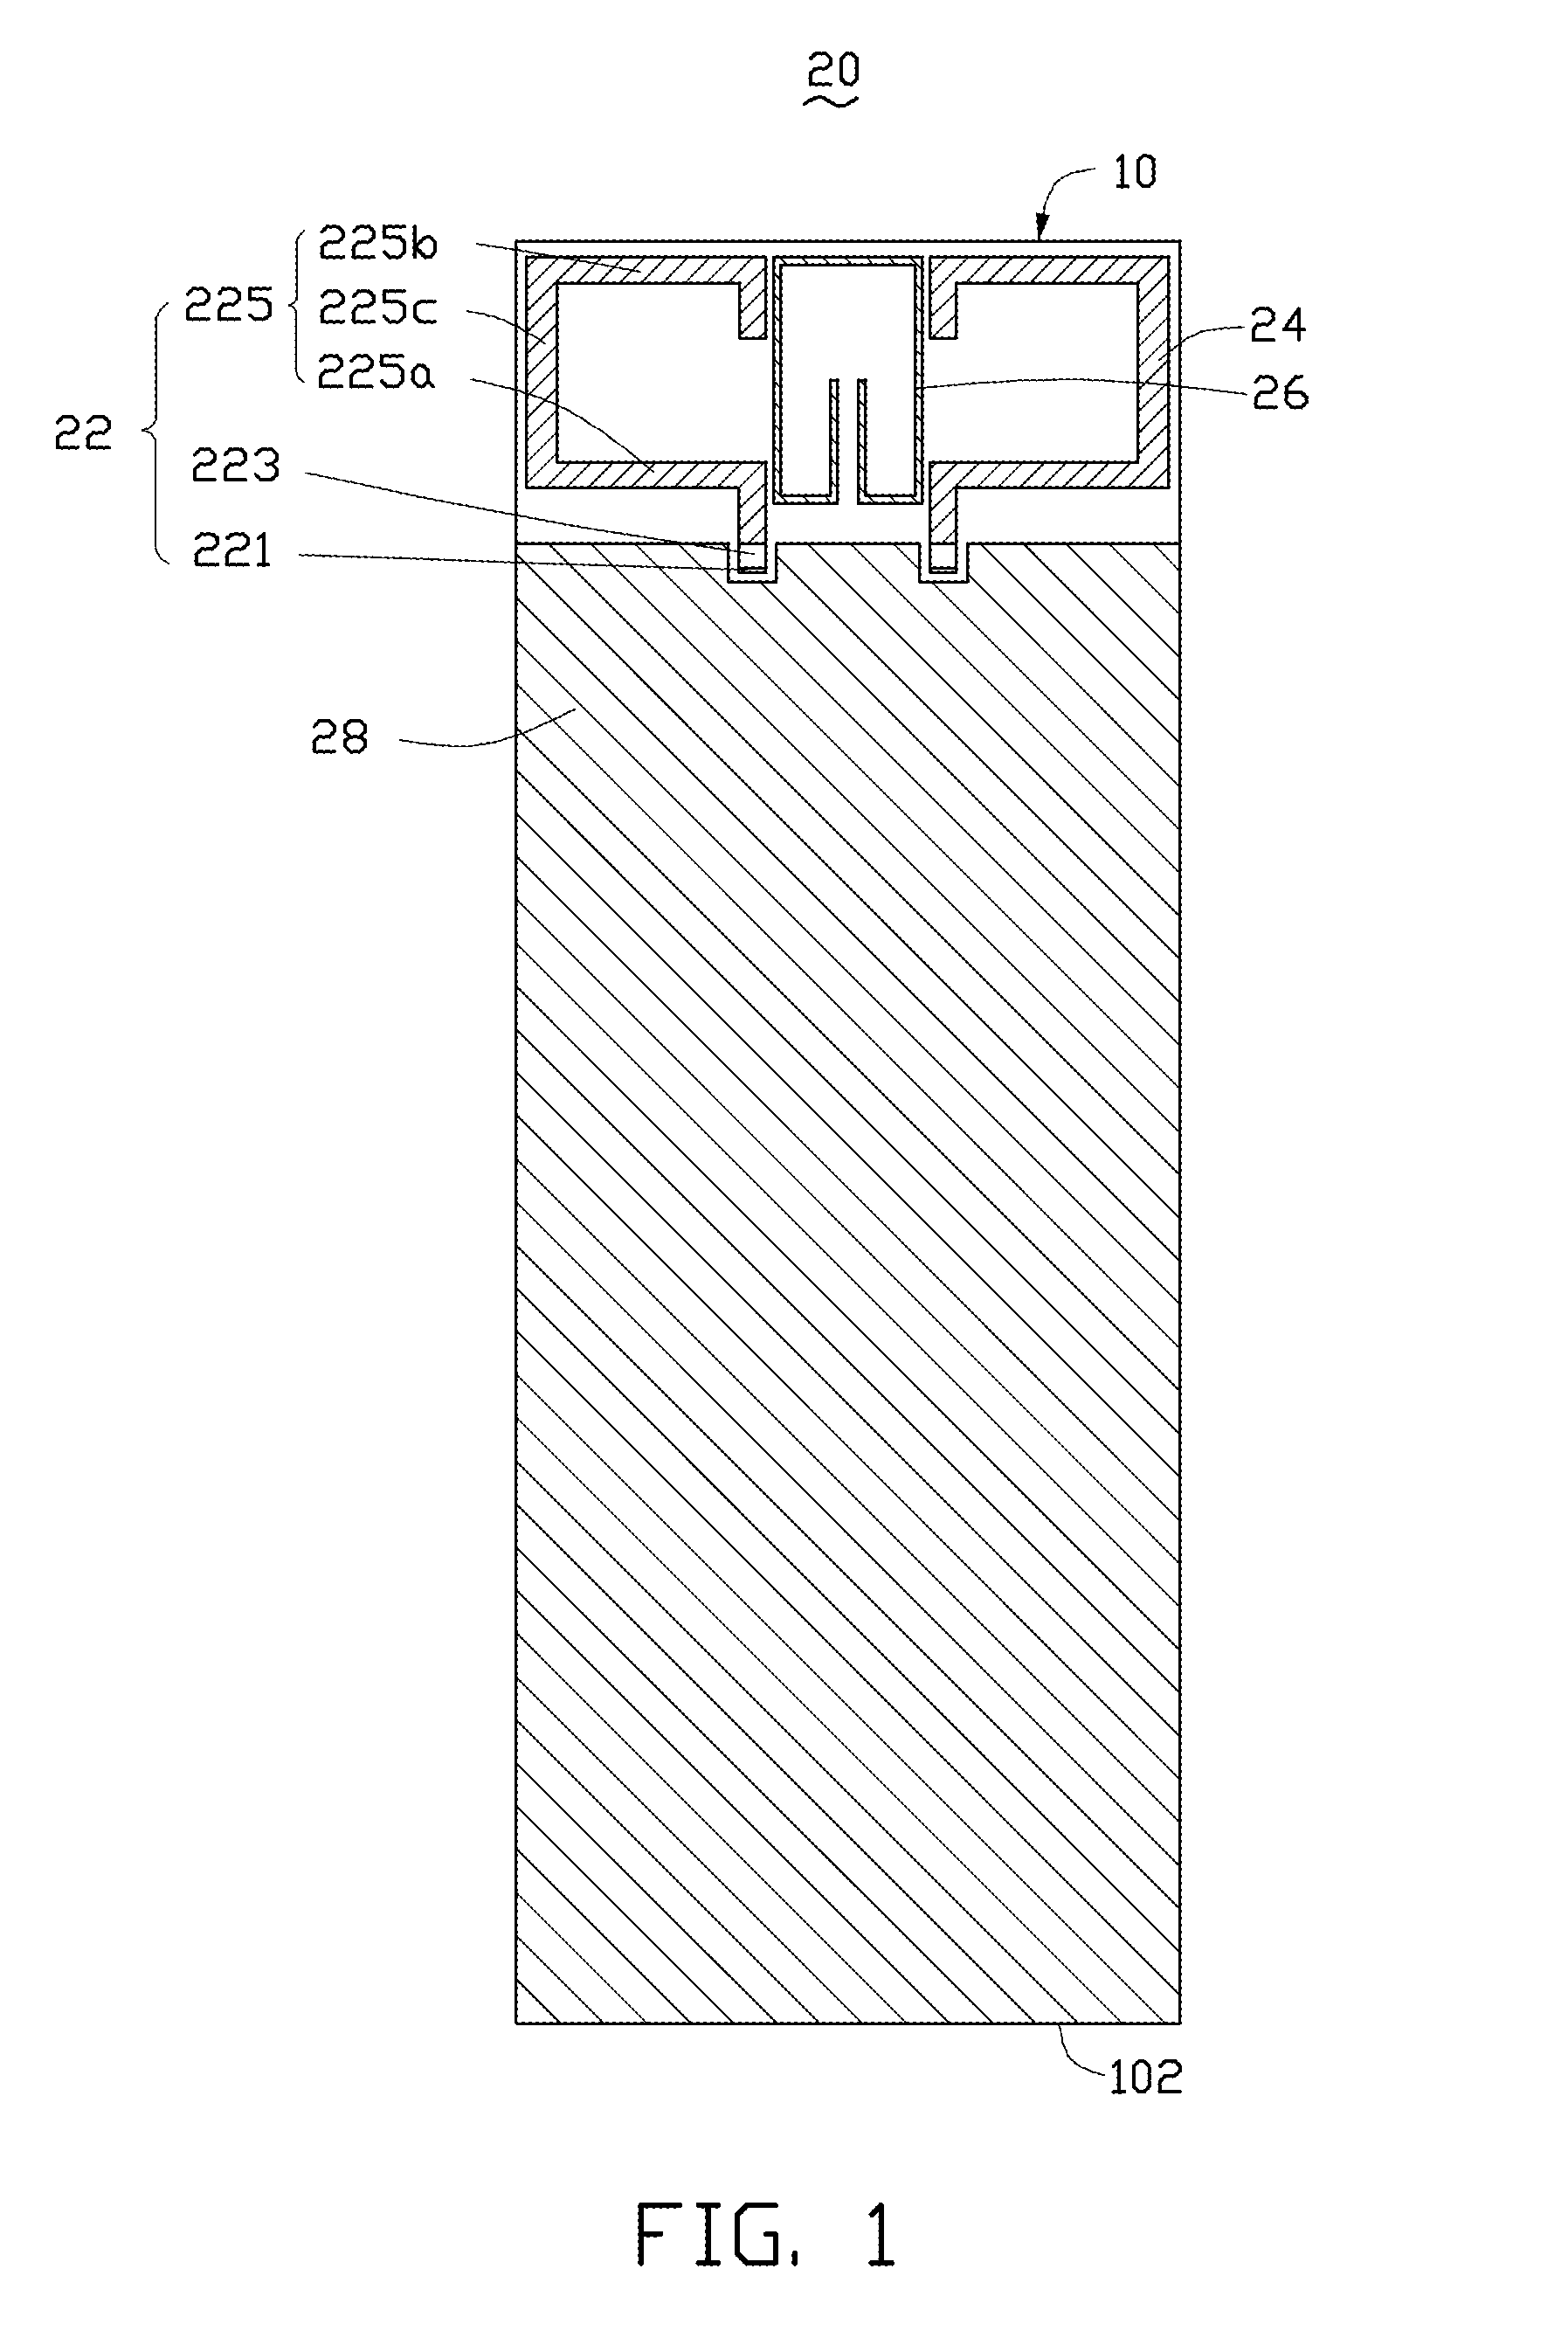 Multiple-input multiple-output antenna